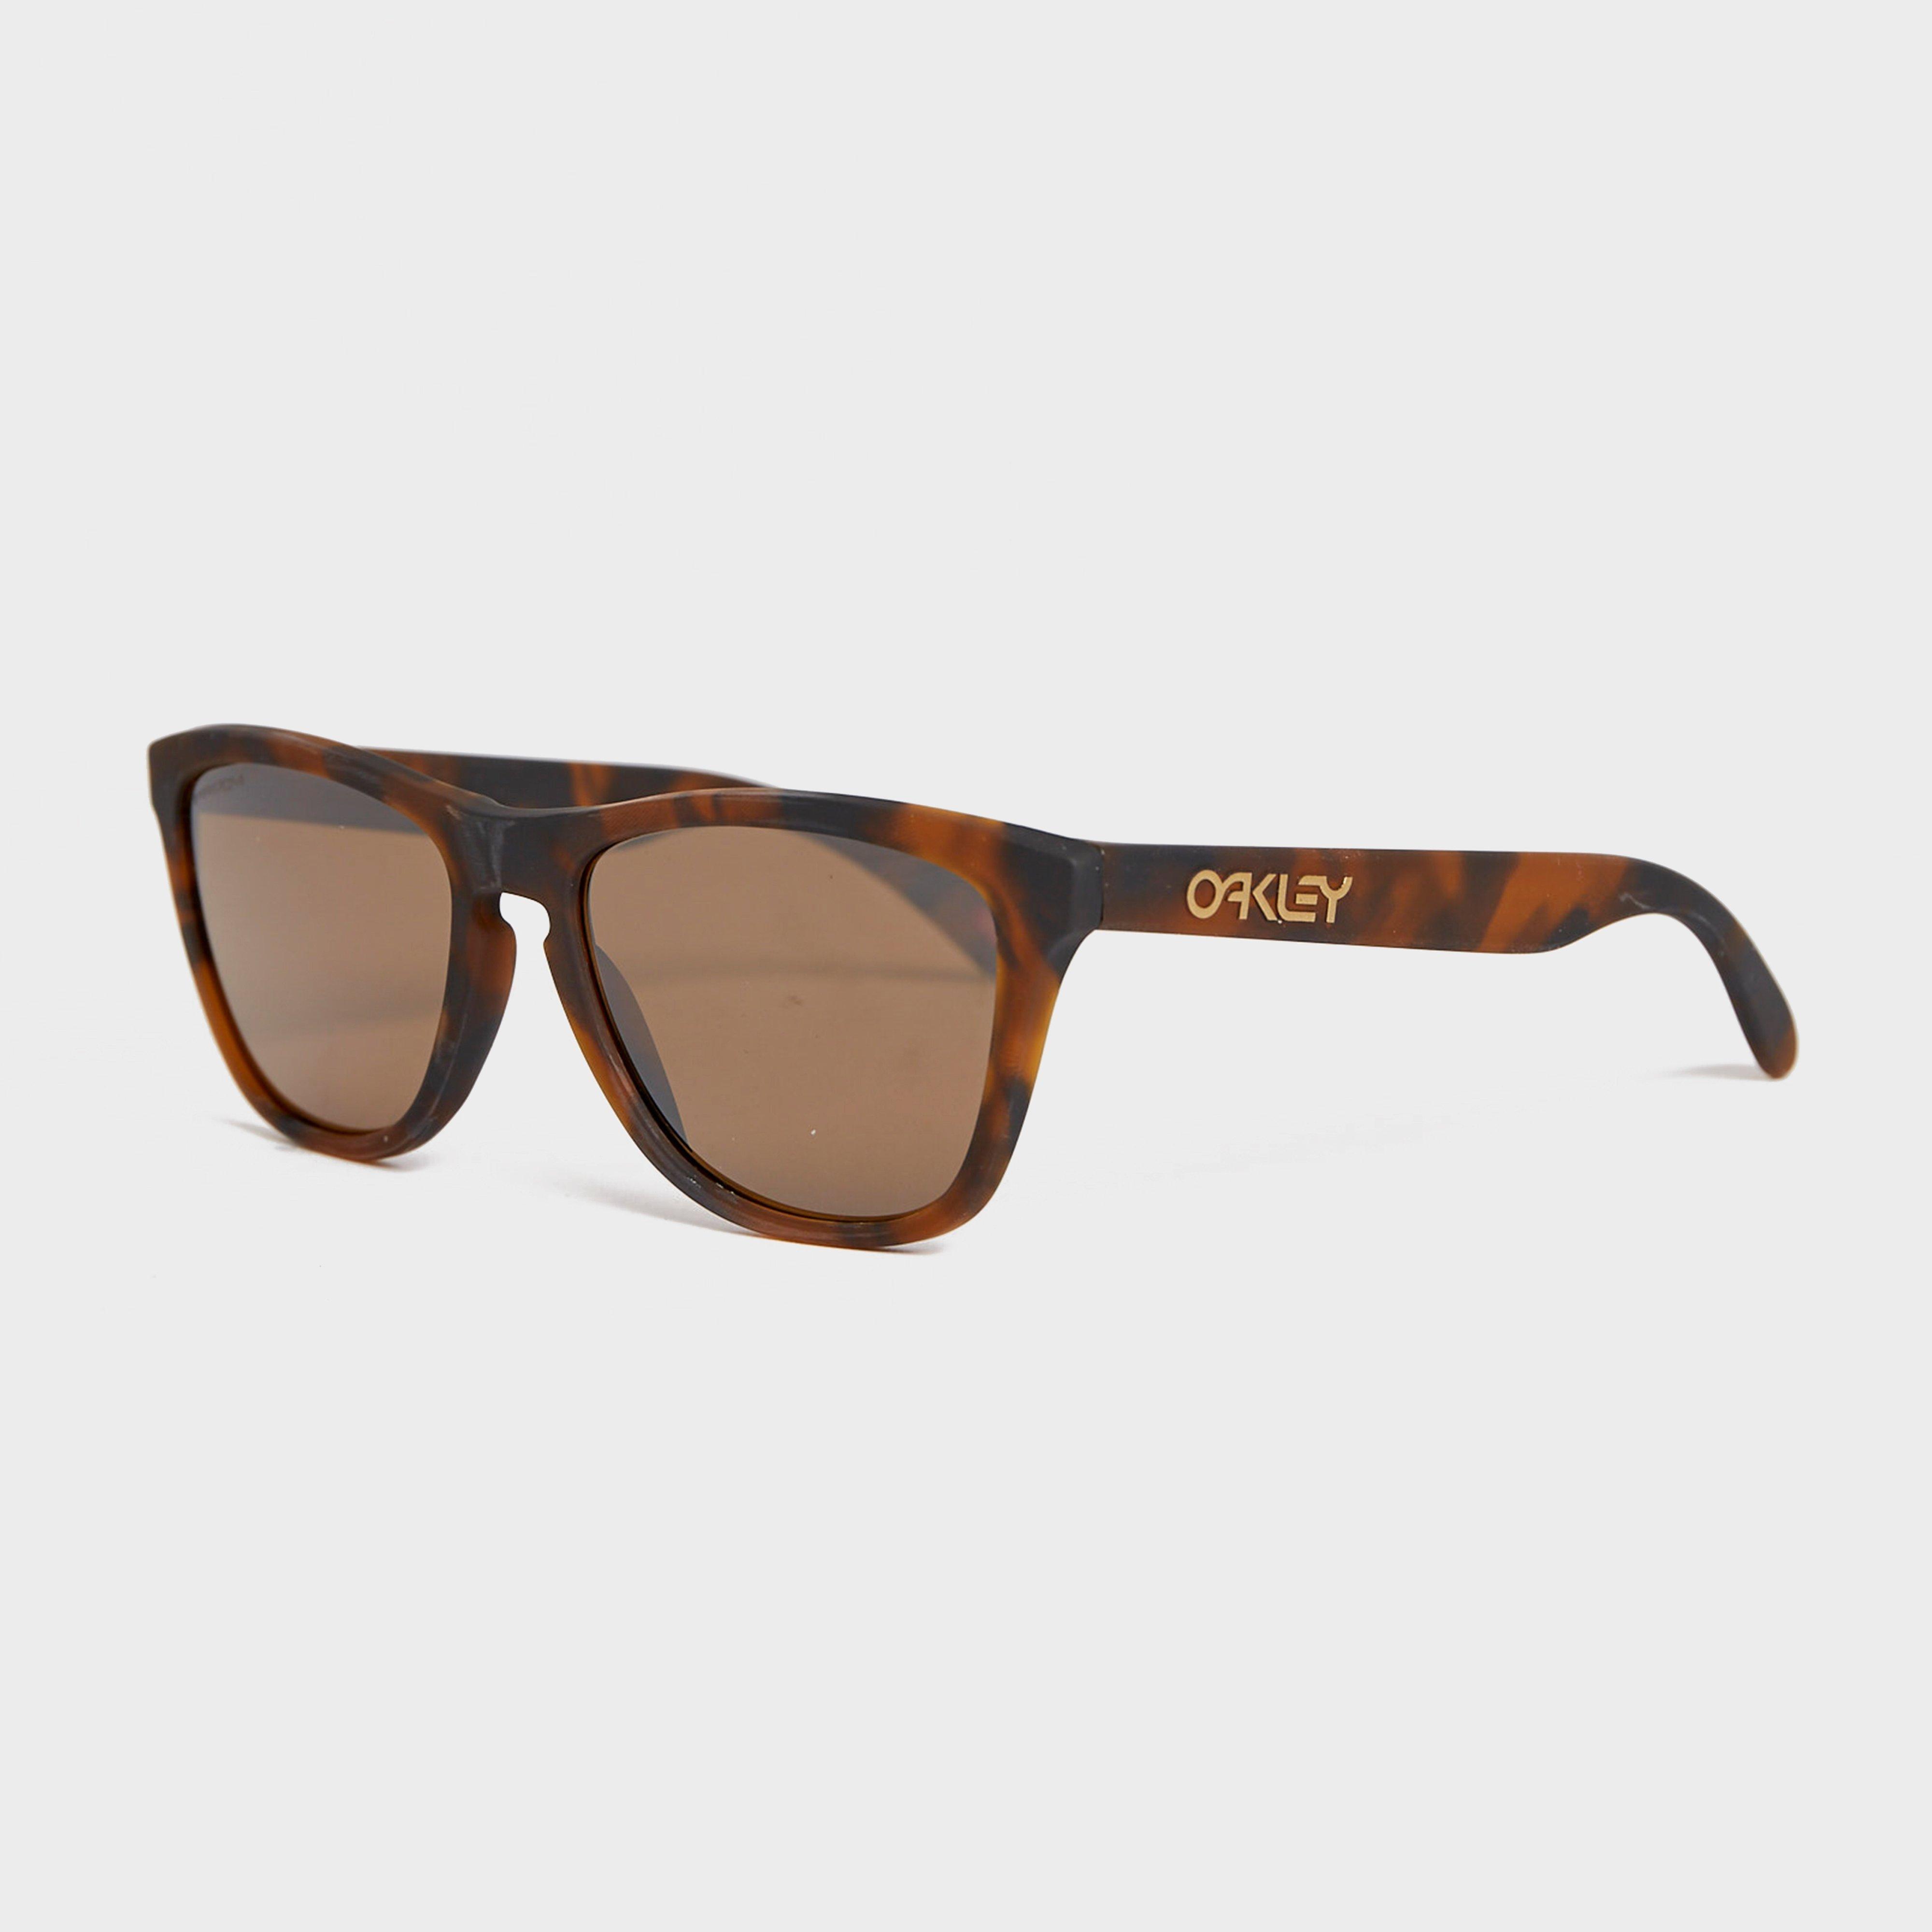 Oakley Mens Frogskins Sunglasses (prizm Tungsten) - Brown/brown  Brown/brown